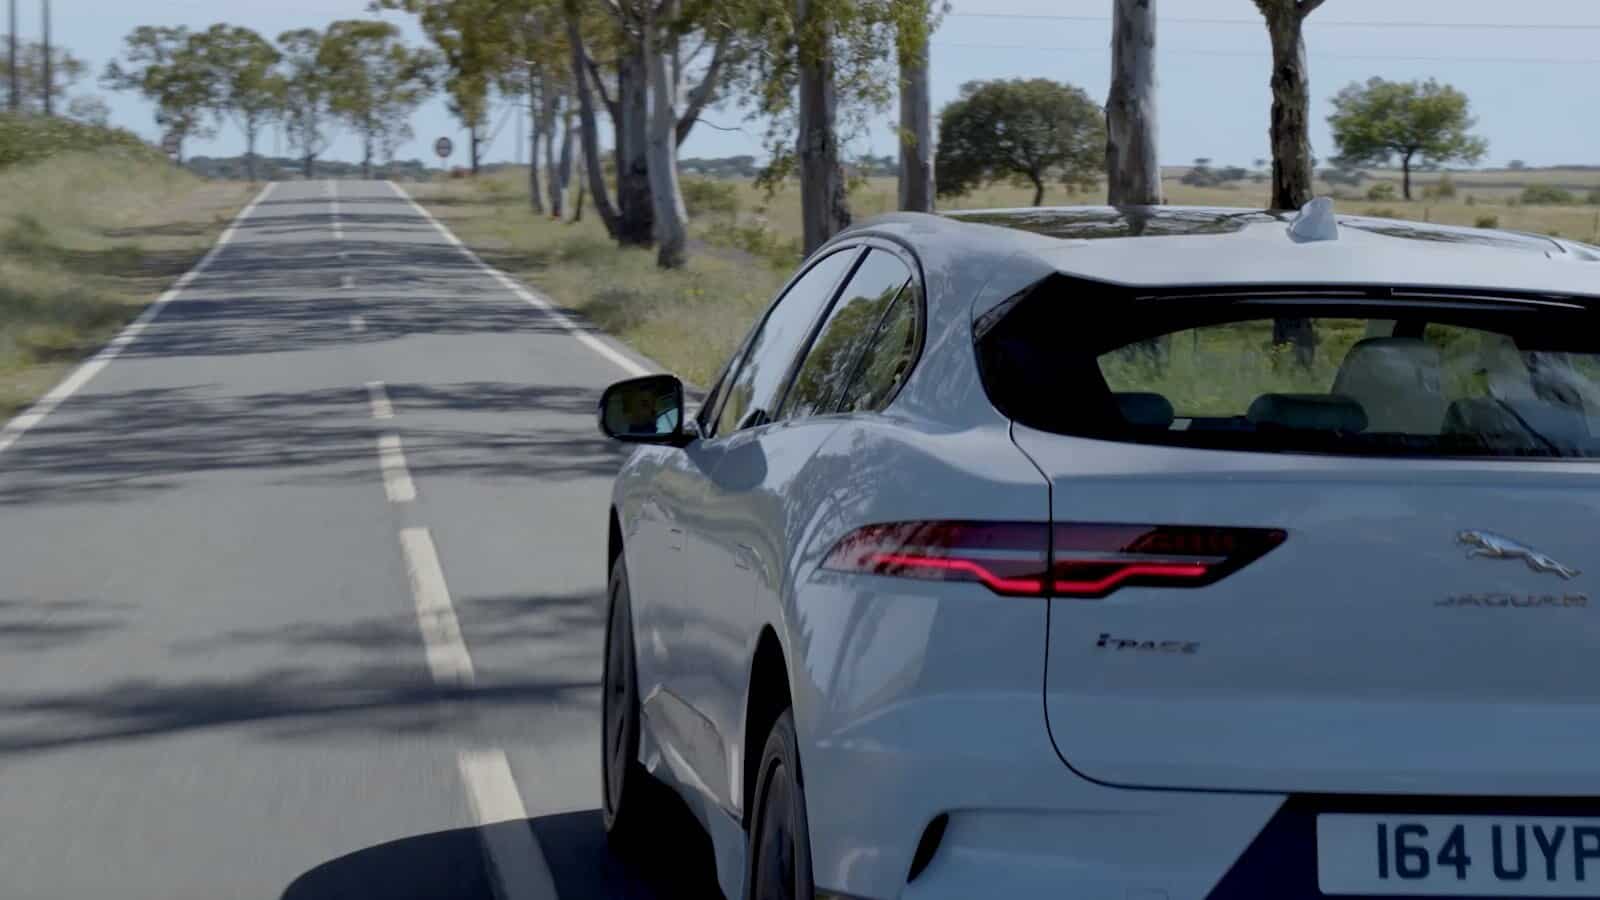 Jaguar Guaranteed Future Value